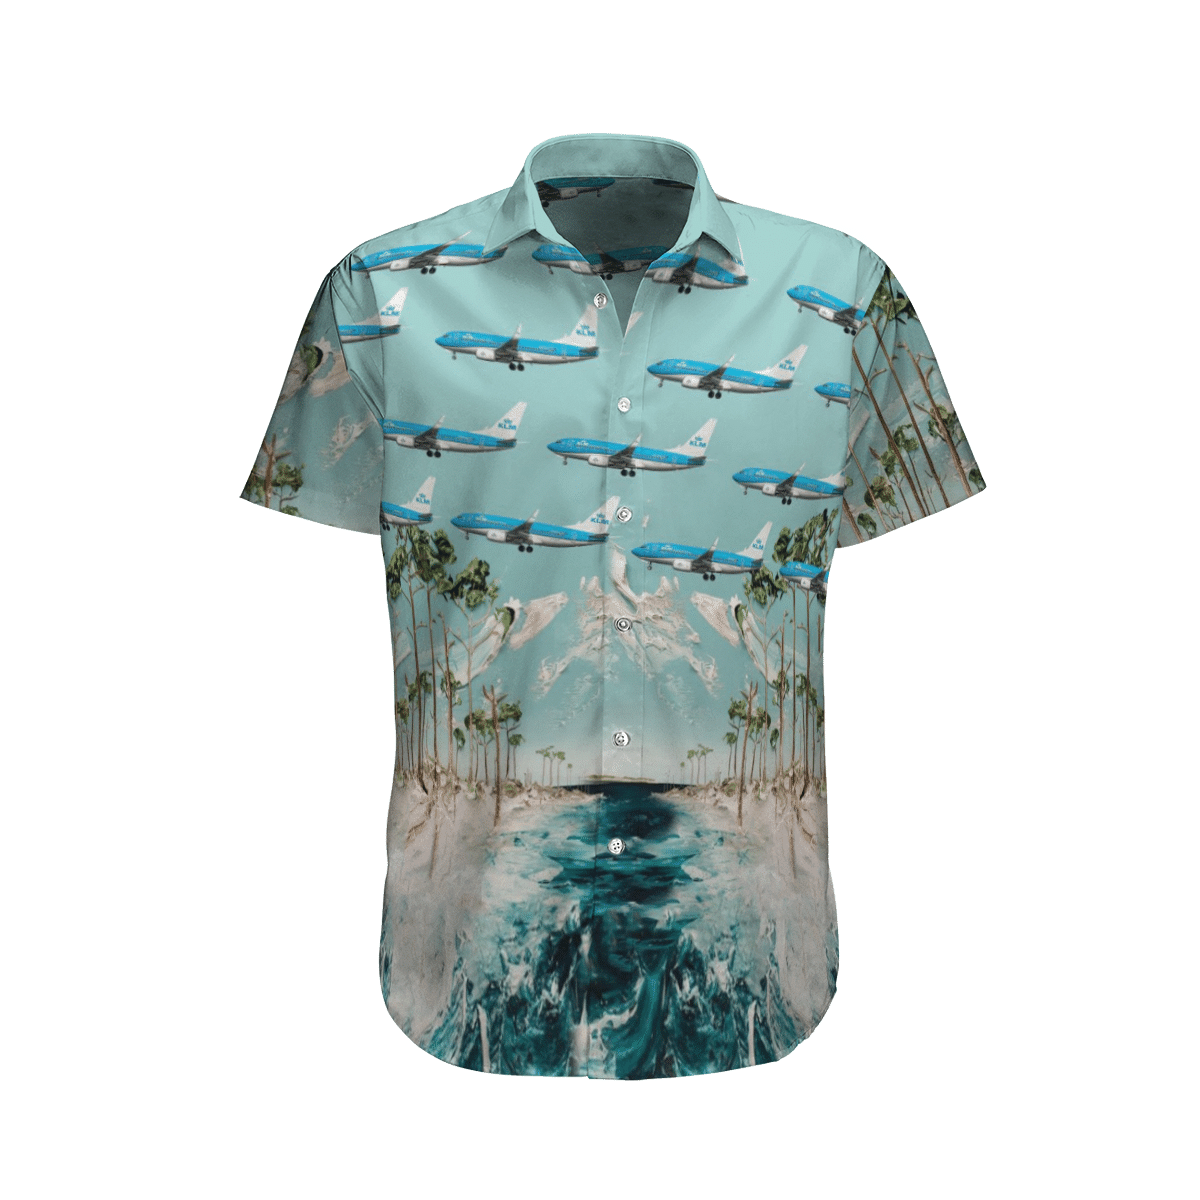 Enjoy your summer with top cool hawaiian shirt below 26